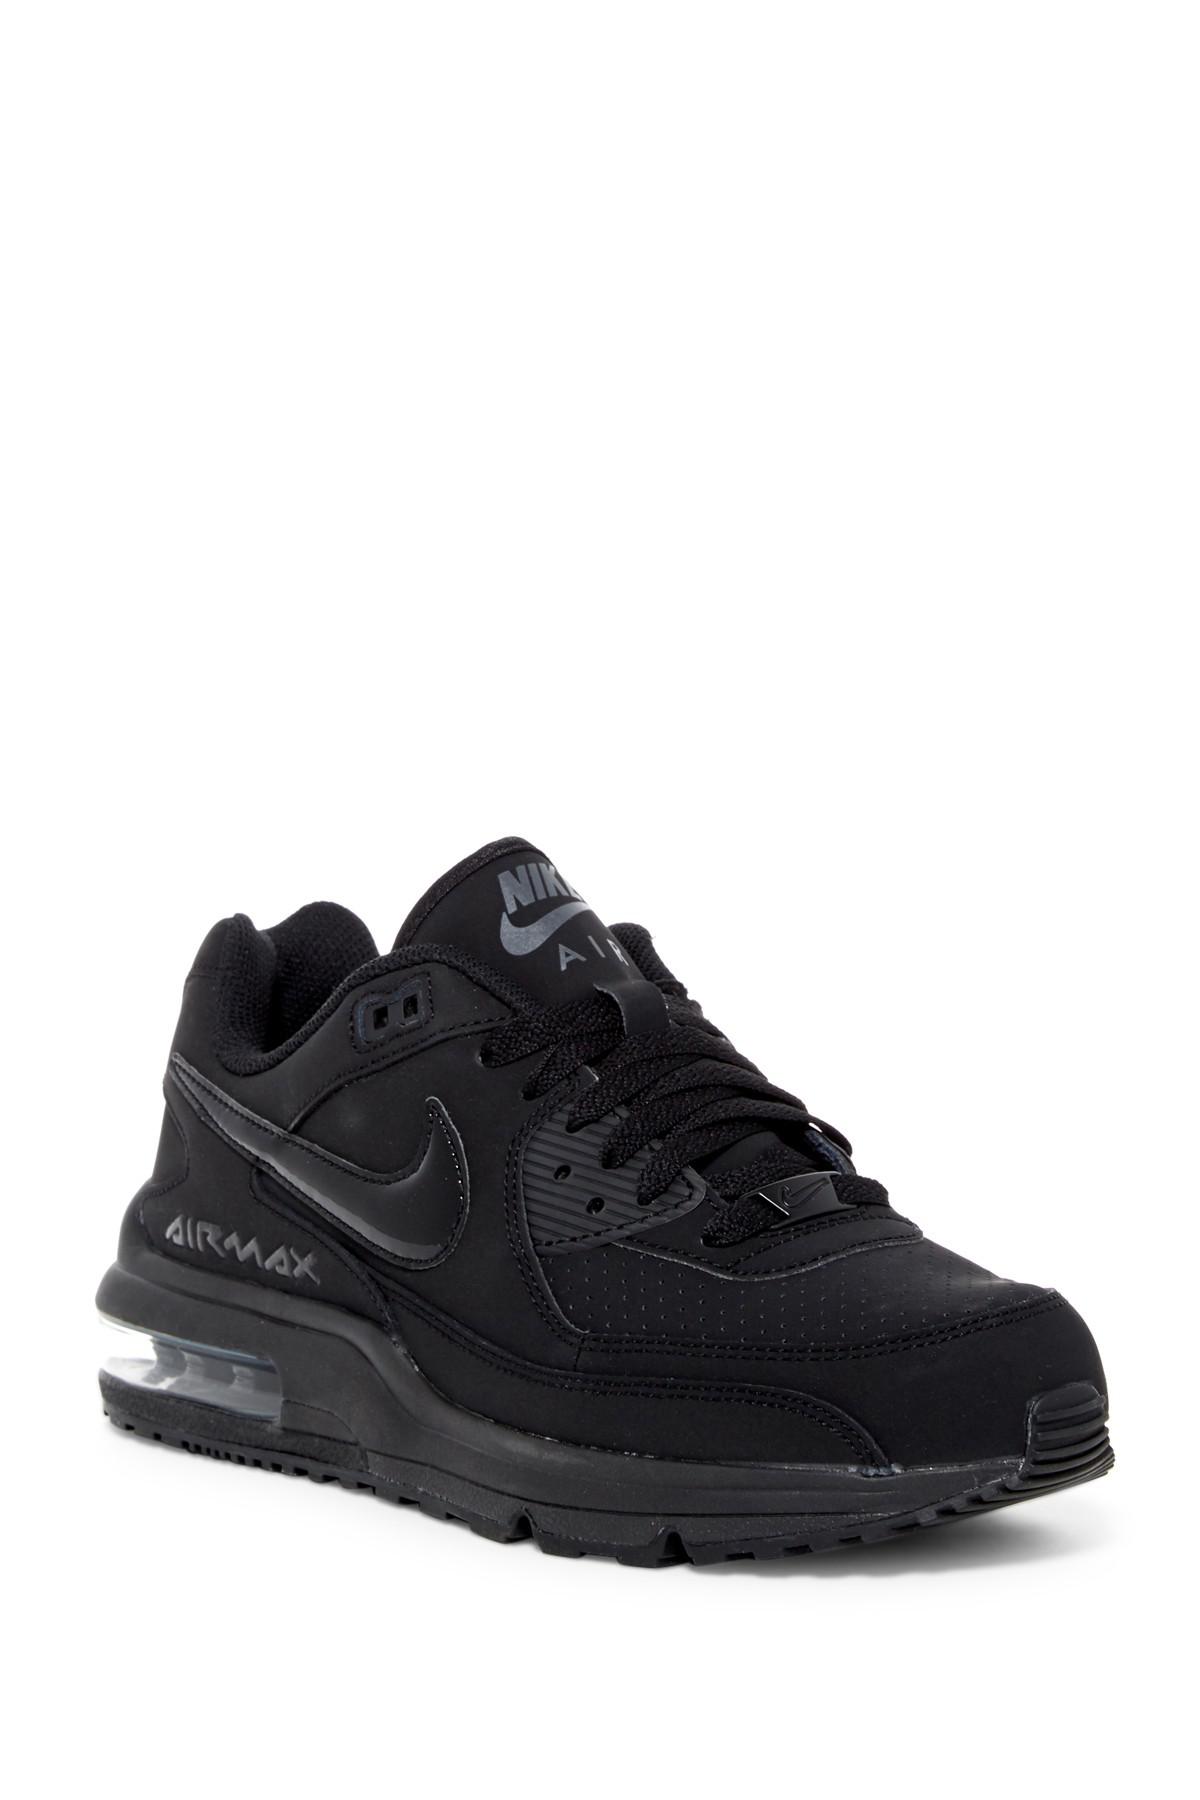 Nike Leather Air Max Wright 3 Sneaker (men) in Black-Black-Anthracite (Black)  for Men - Lyst